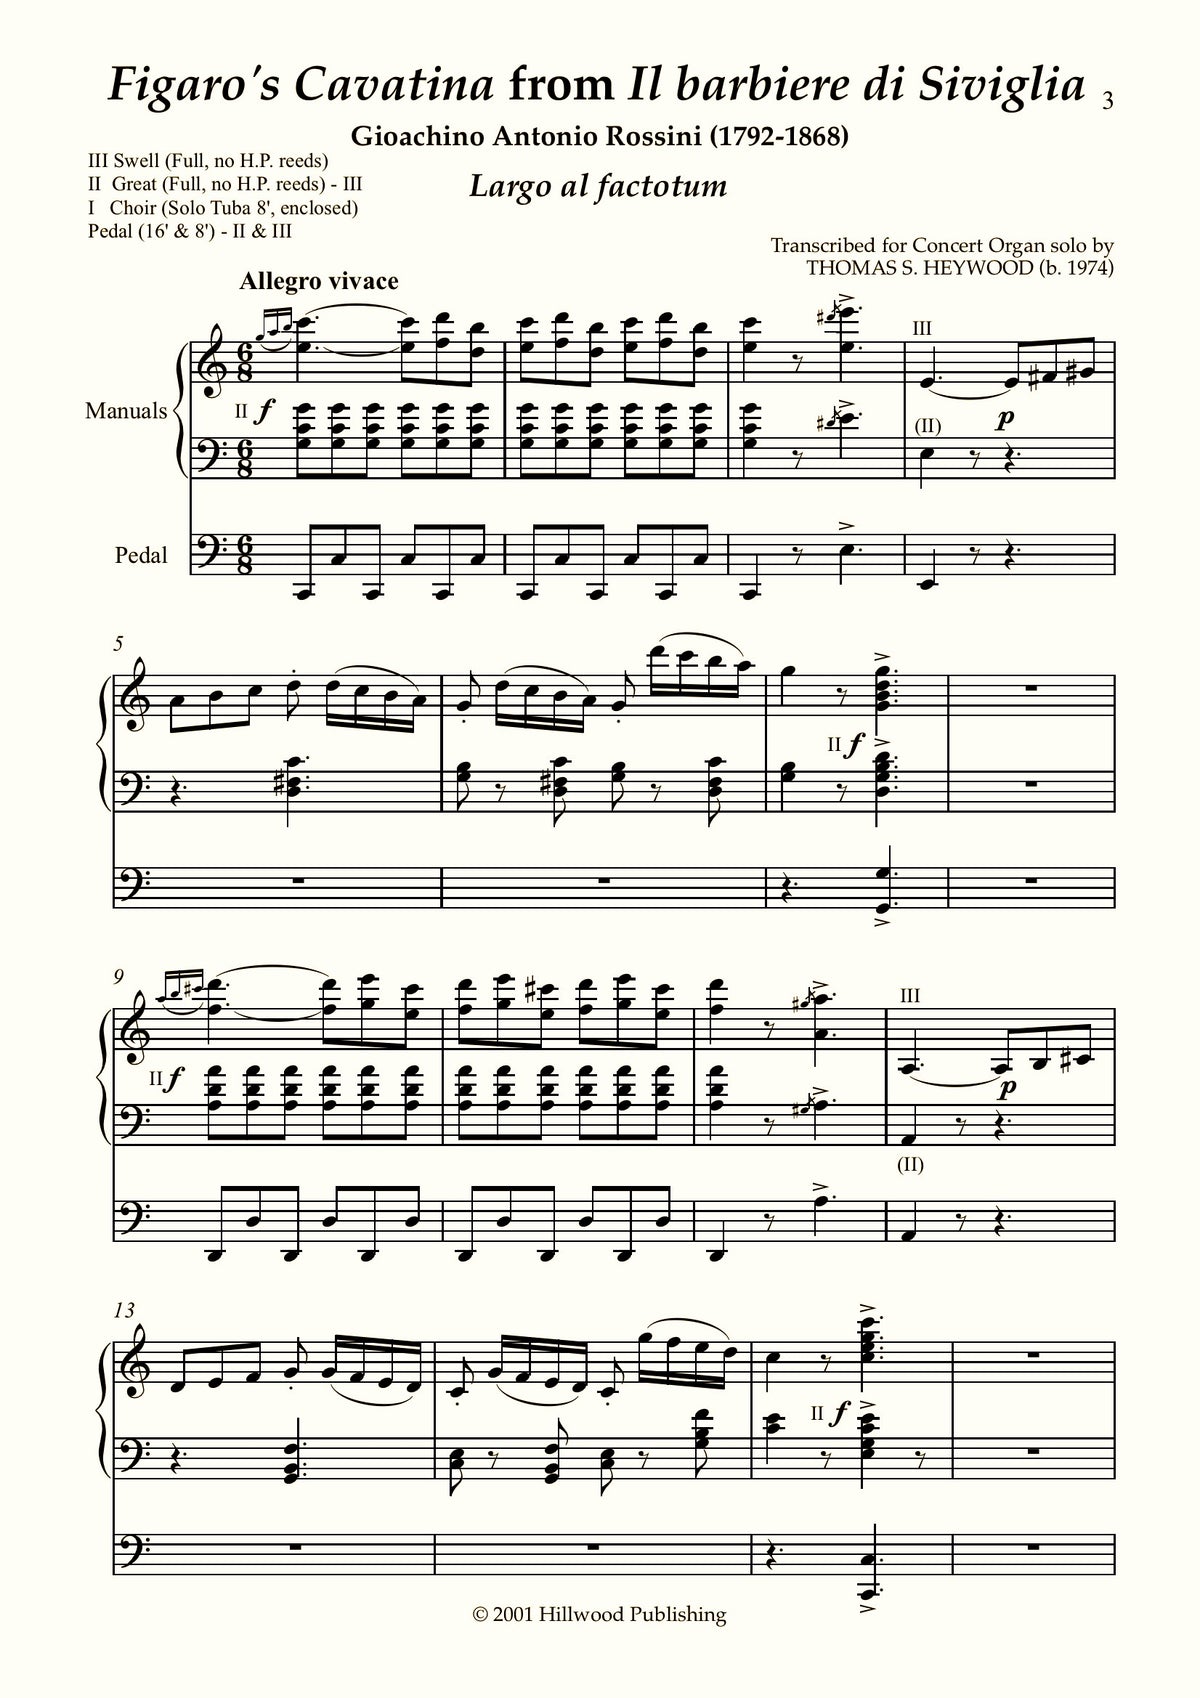 Rossini/Heywood - Figaro's Cavatina 'Largo al factotum' from The Barber of Seville (Score) - Concert Organ International